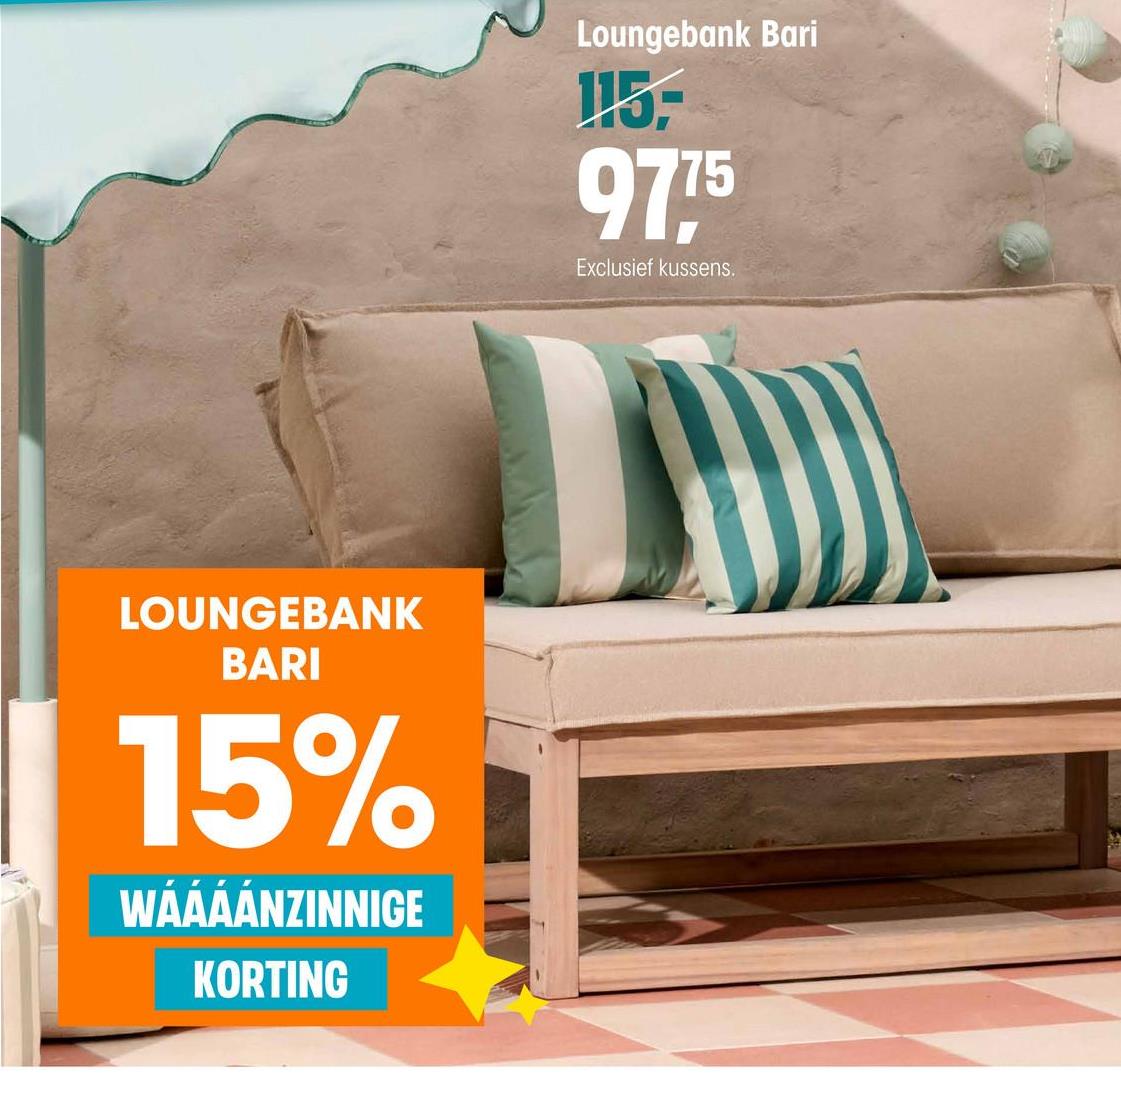 LOUNGEBANK
BARI
15%
WÁÁÁÁNZINNIGE
KORTING
Loungebank Bari
115-
97.75
Exclusief kussens.